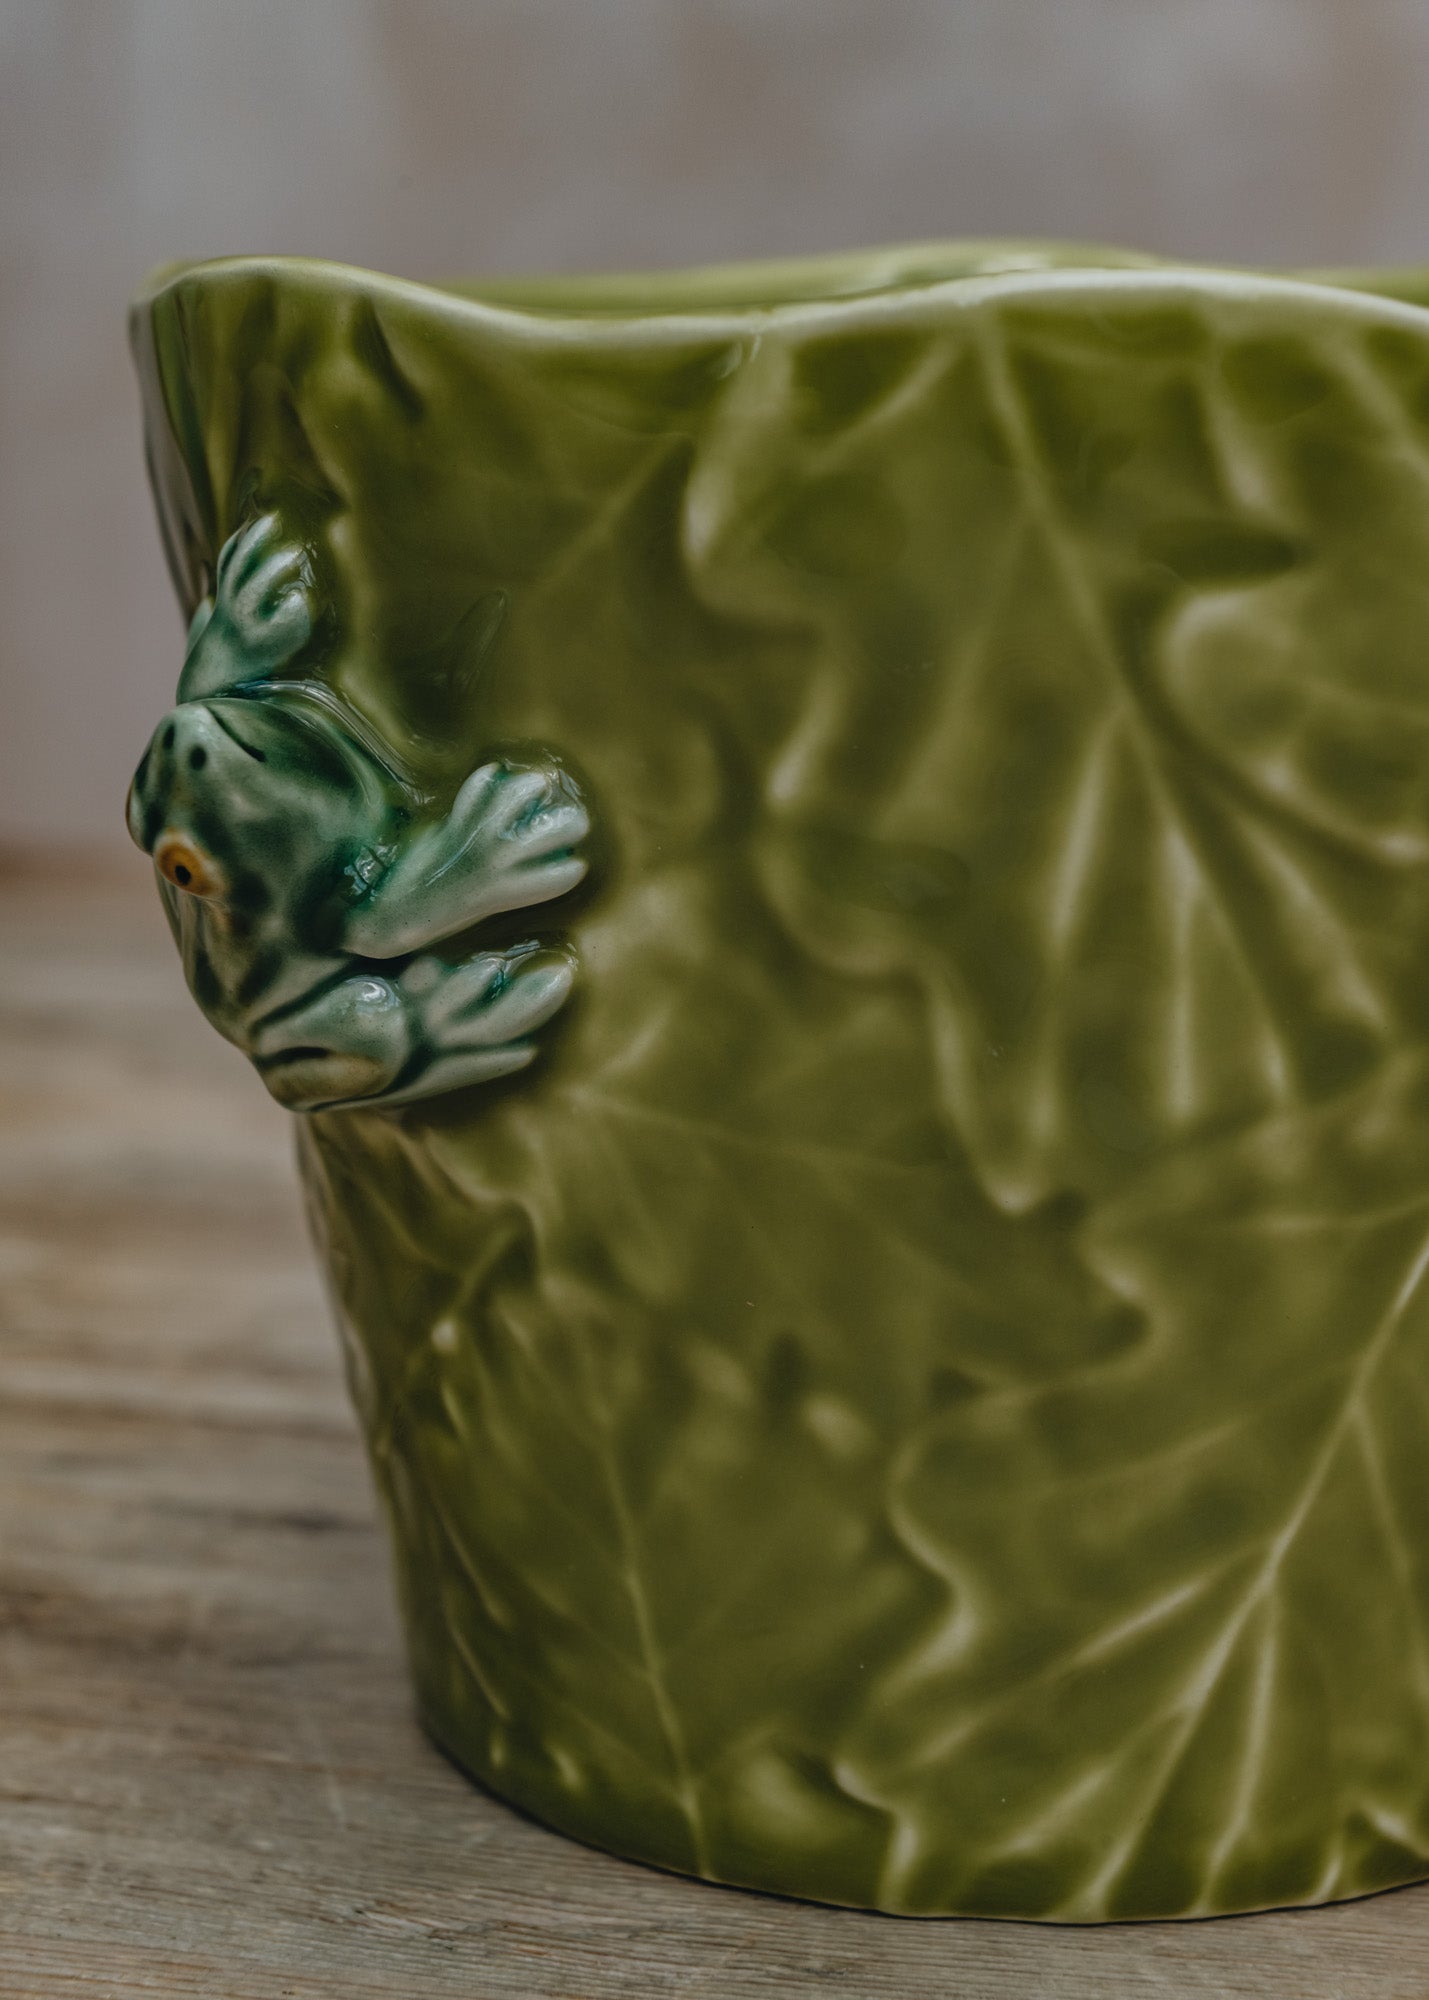 Bordhallo Pinheiro Frog Vase/Pot Cover